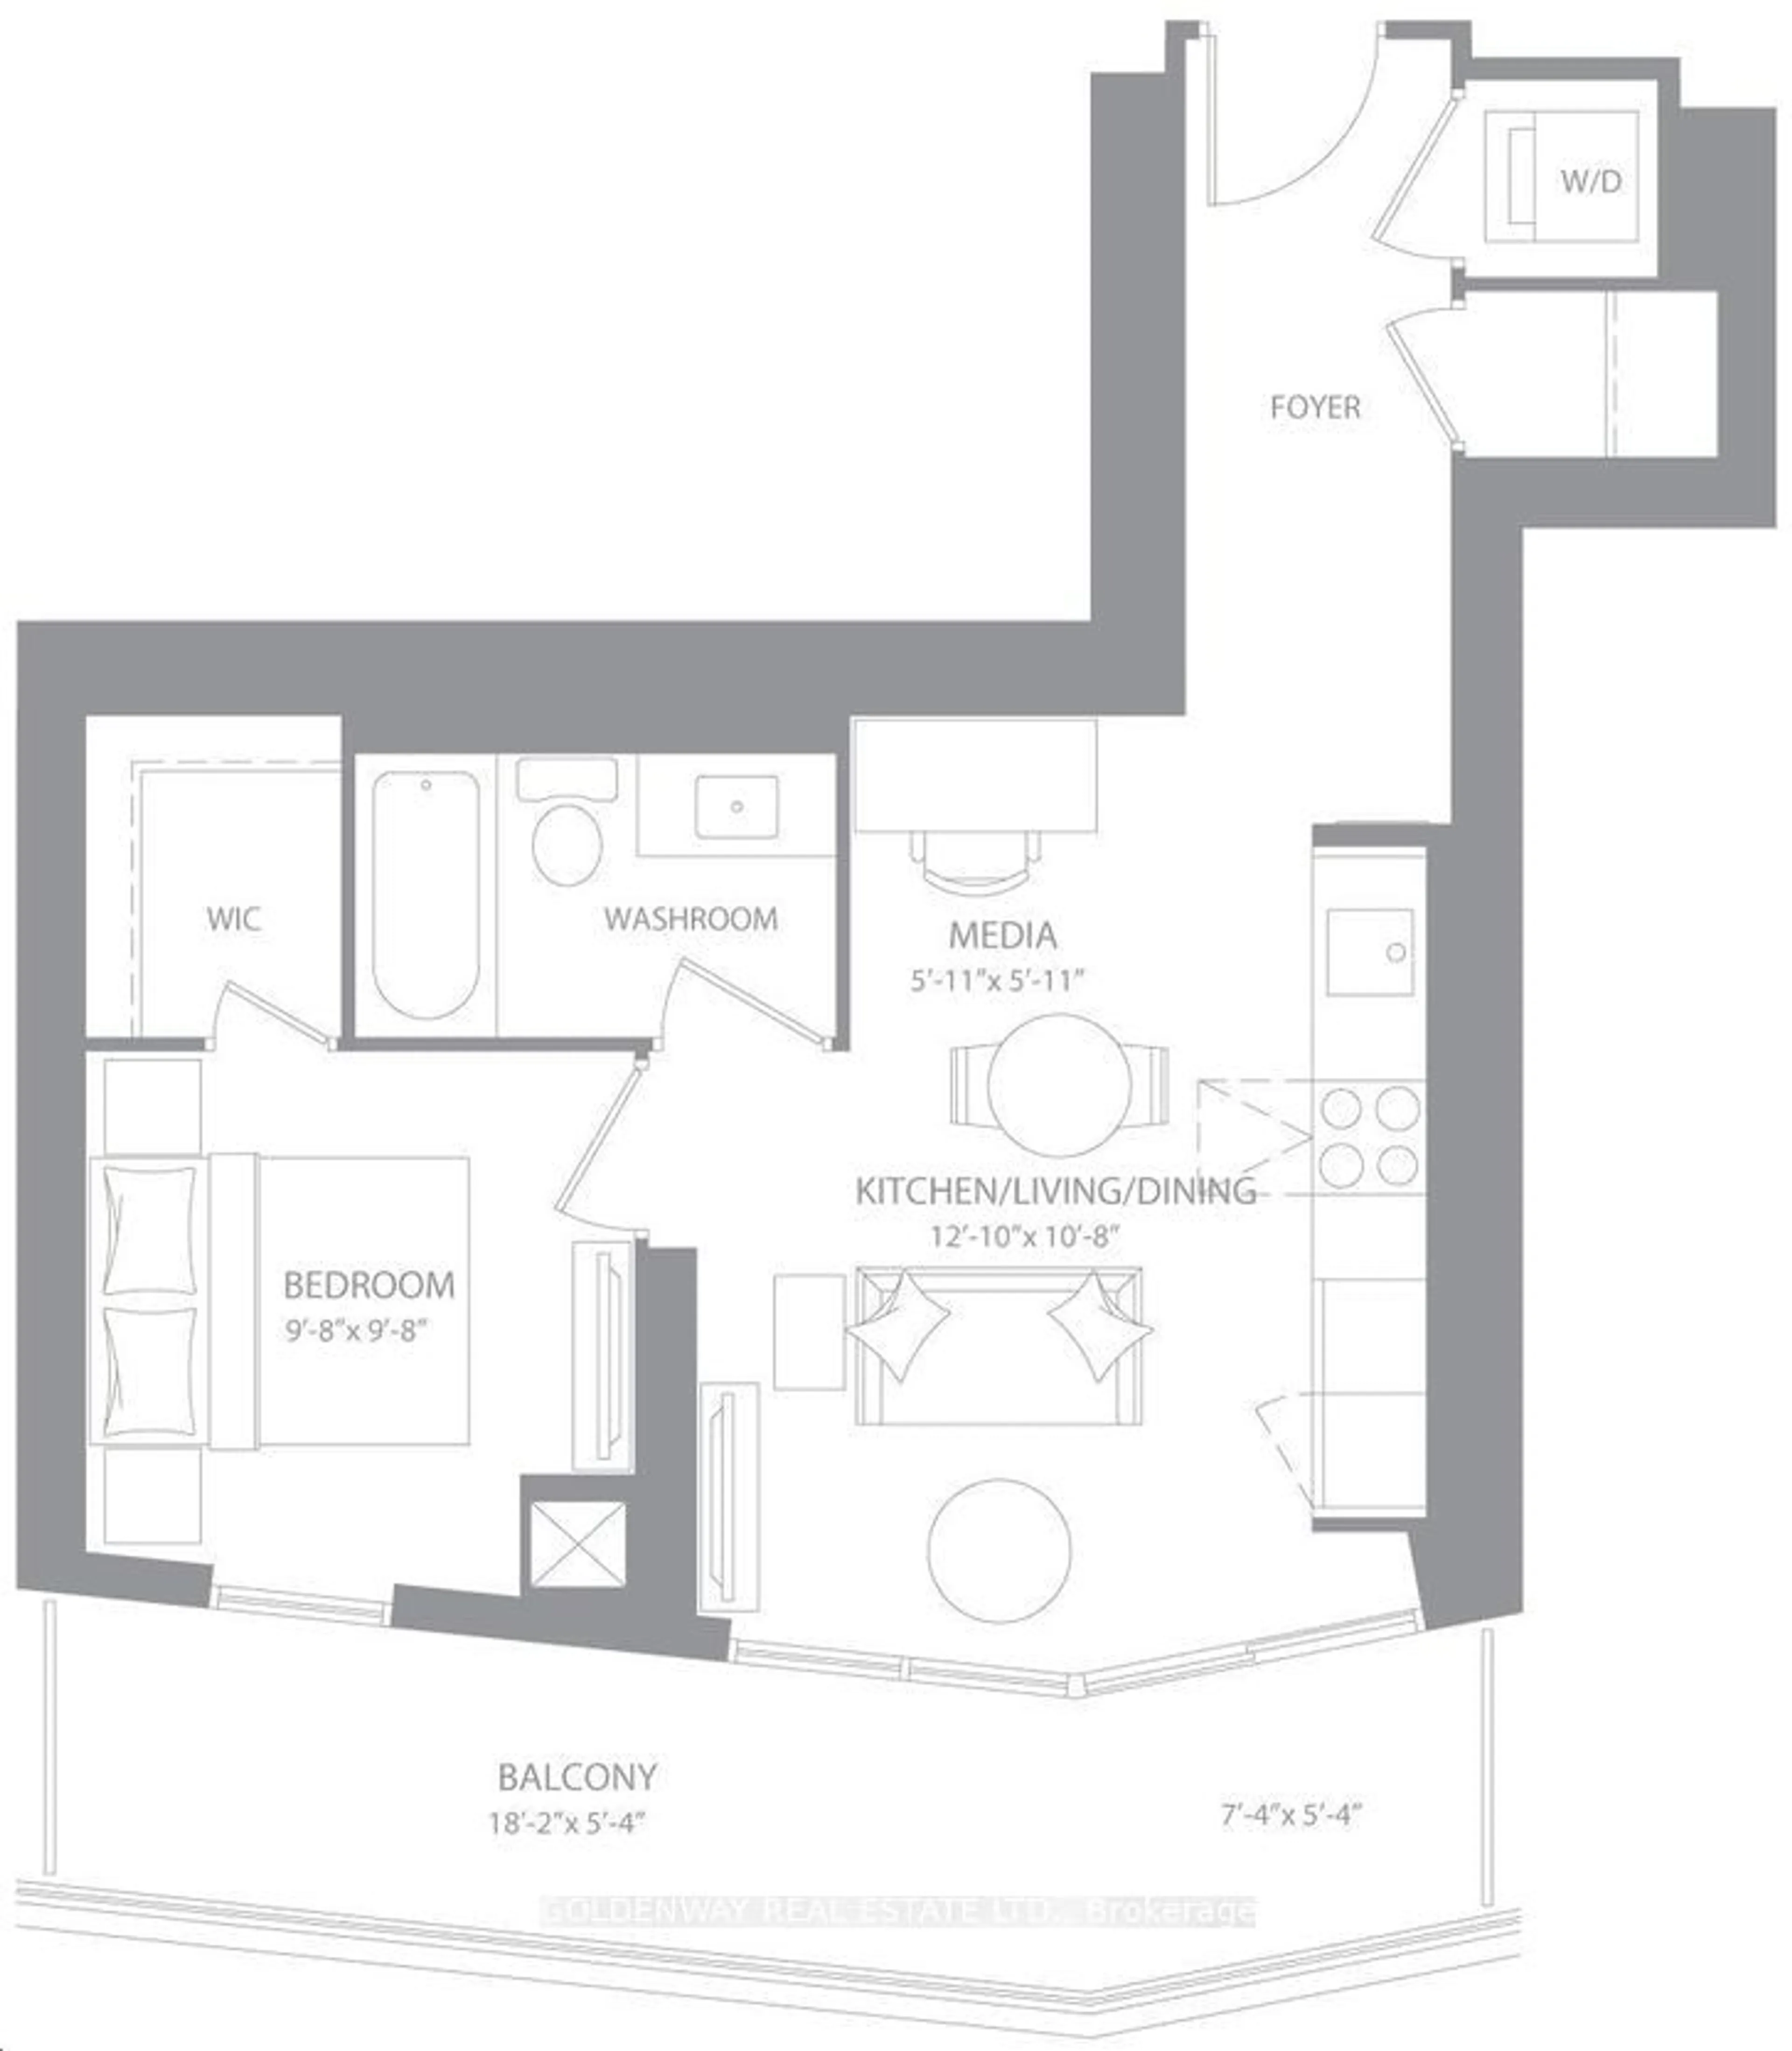 Floor plan for 2221 Yonge St #3005, Toronto Ontario M4S 2B4